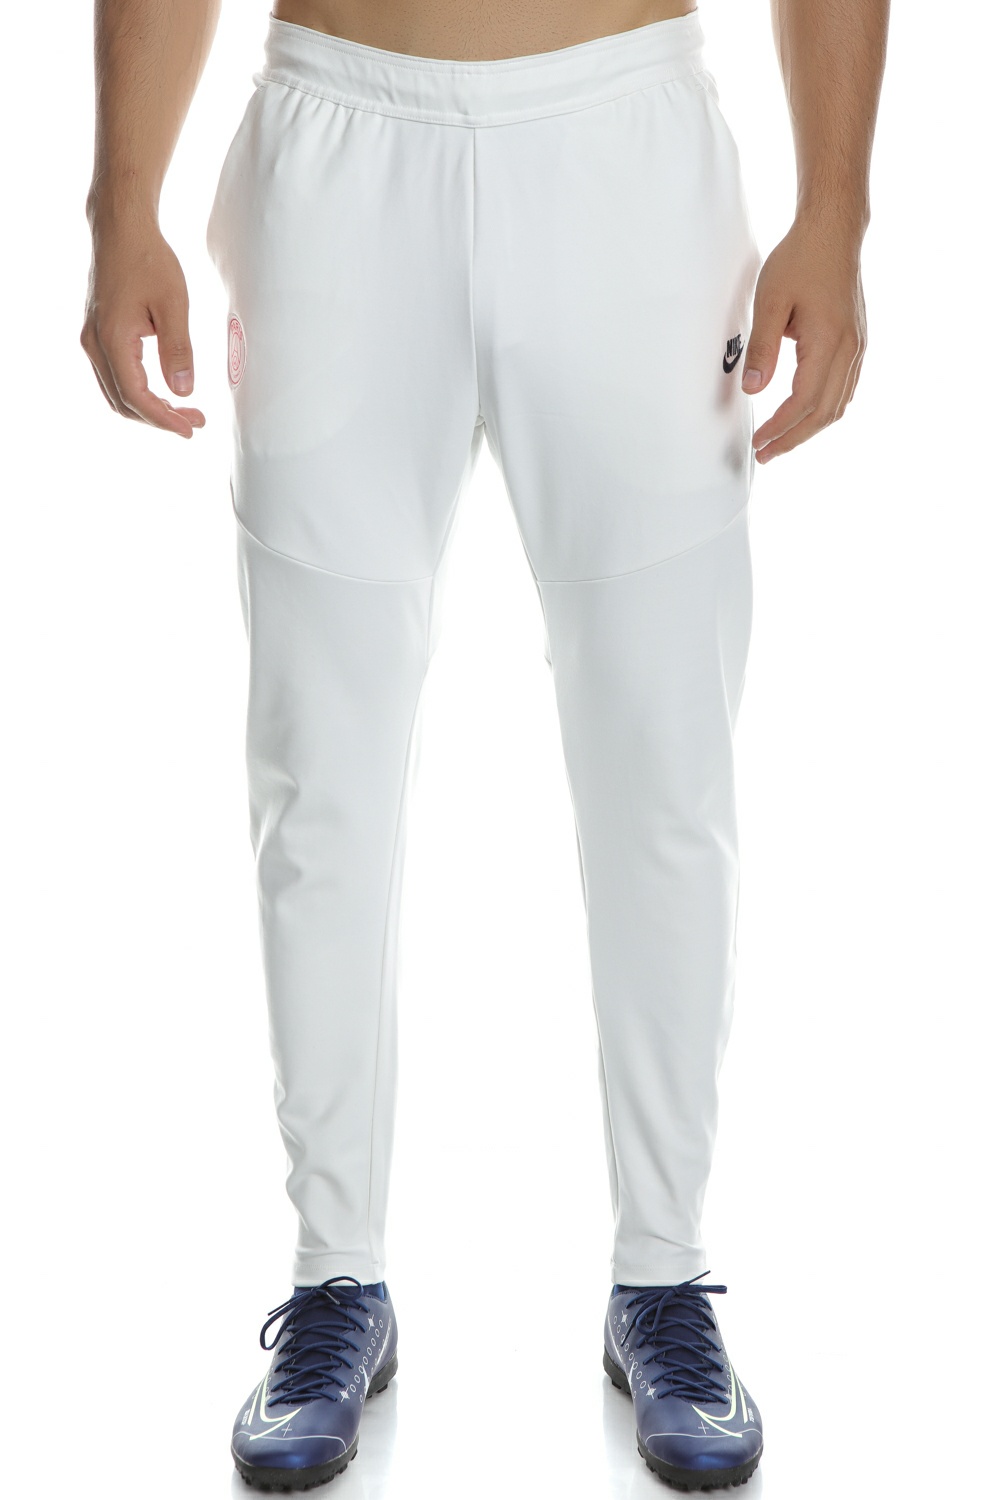 NIKE - Ανδρικό παντελόνι φόρμας NIKE PSG MNSW TCH PCK λευκό